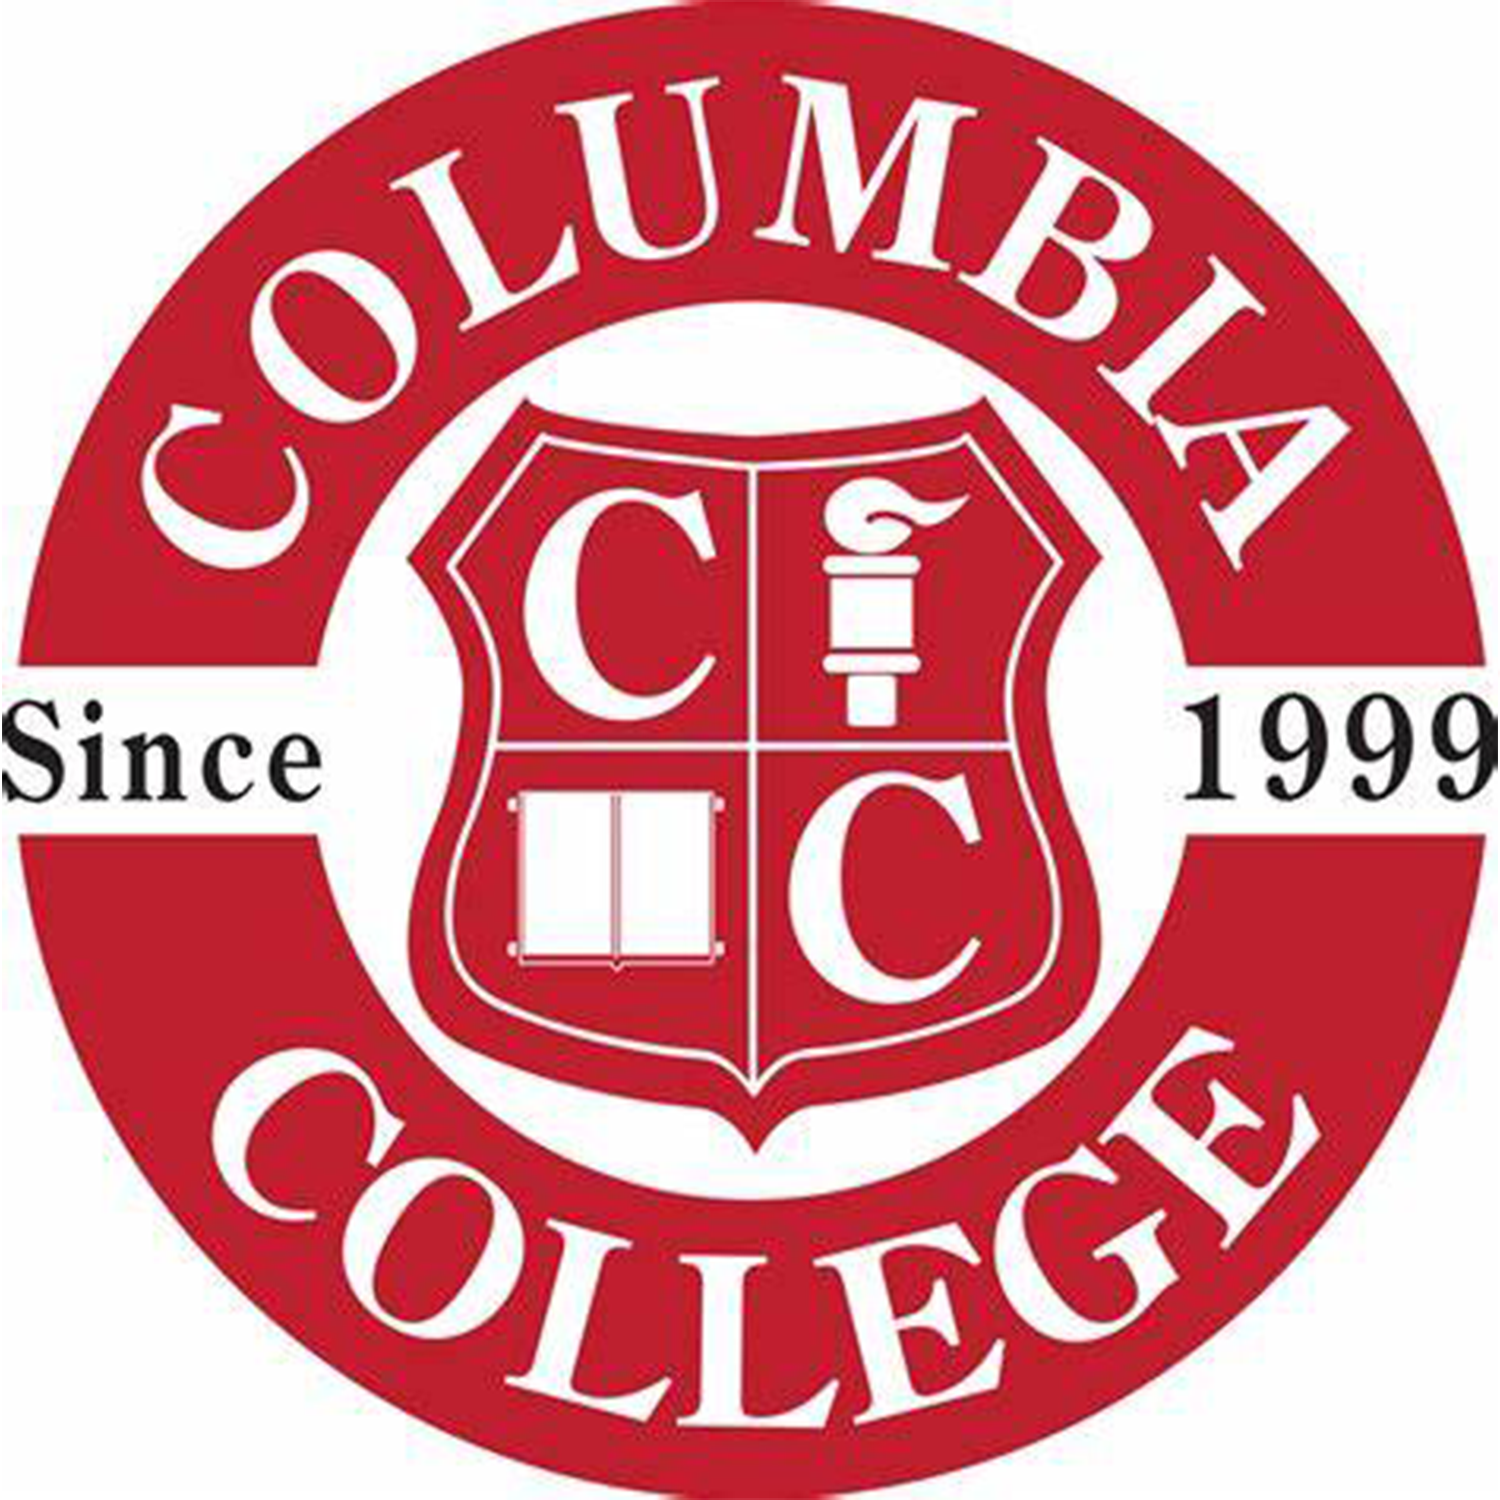 columbia college